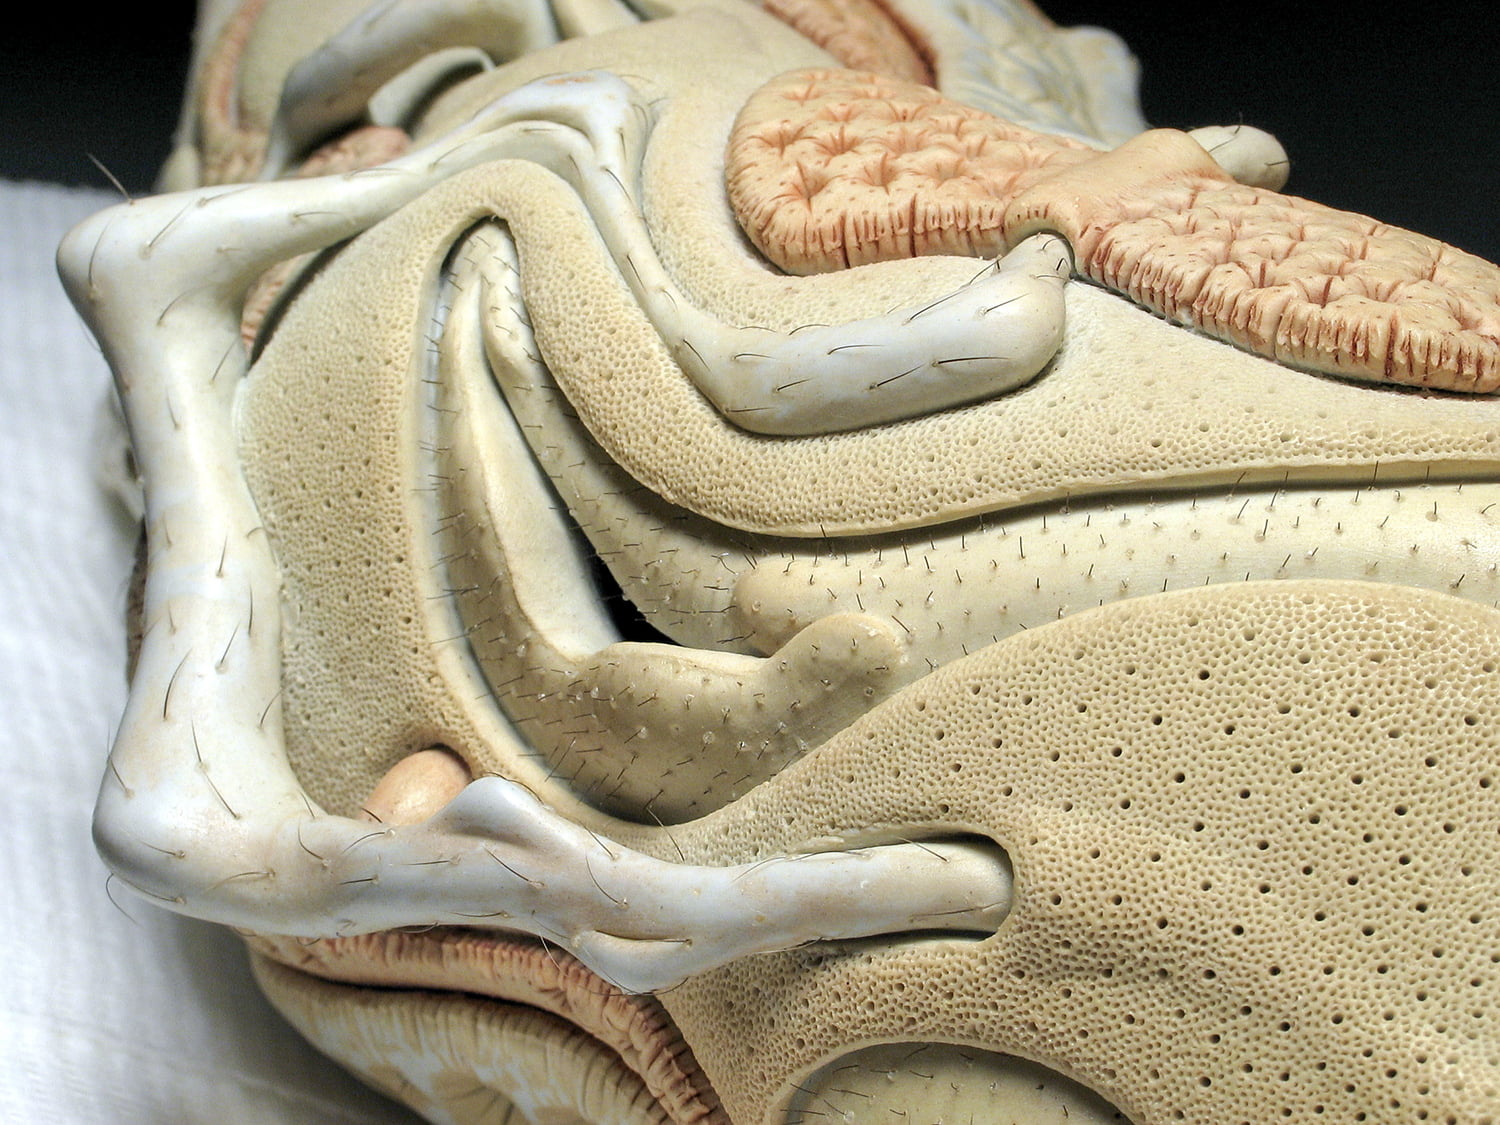 Jason Briggs "Creme". Porcelain, hair, and mixed media. Sculptural ceramic art object.